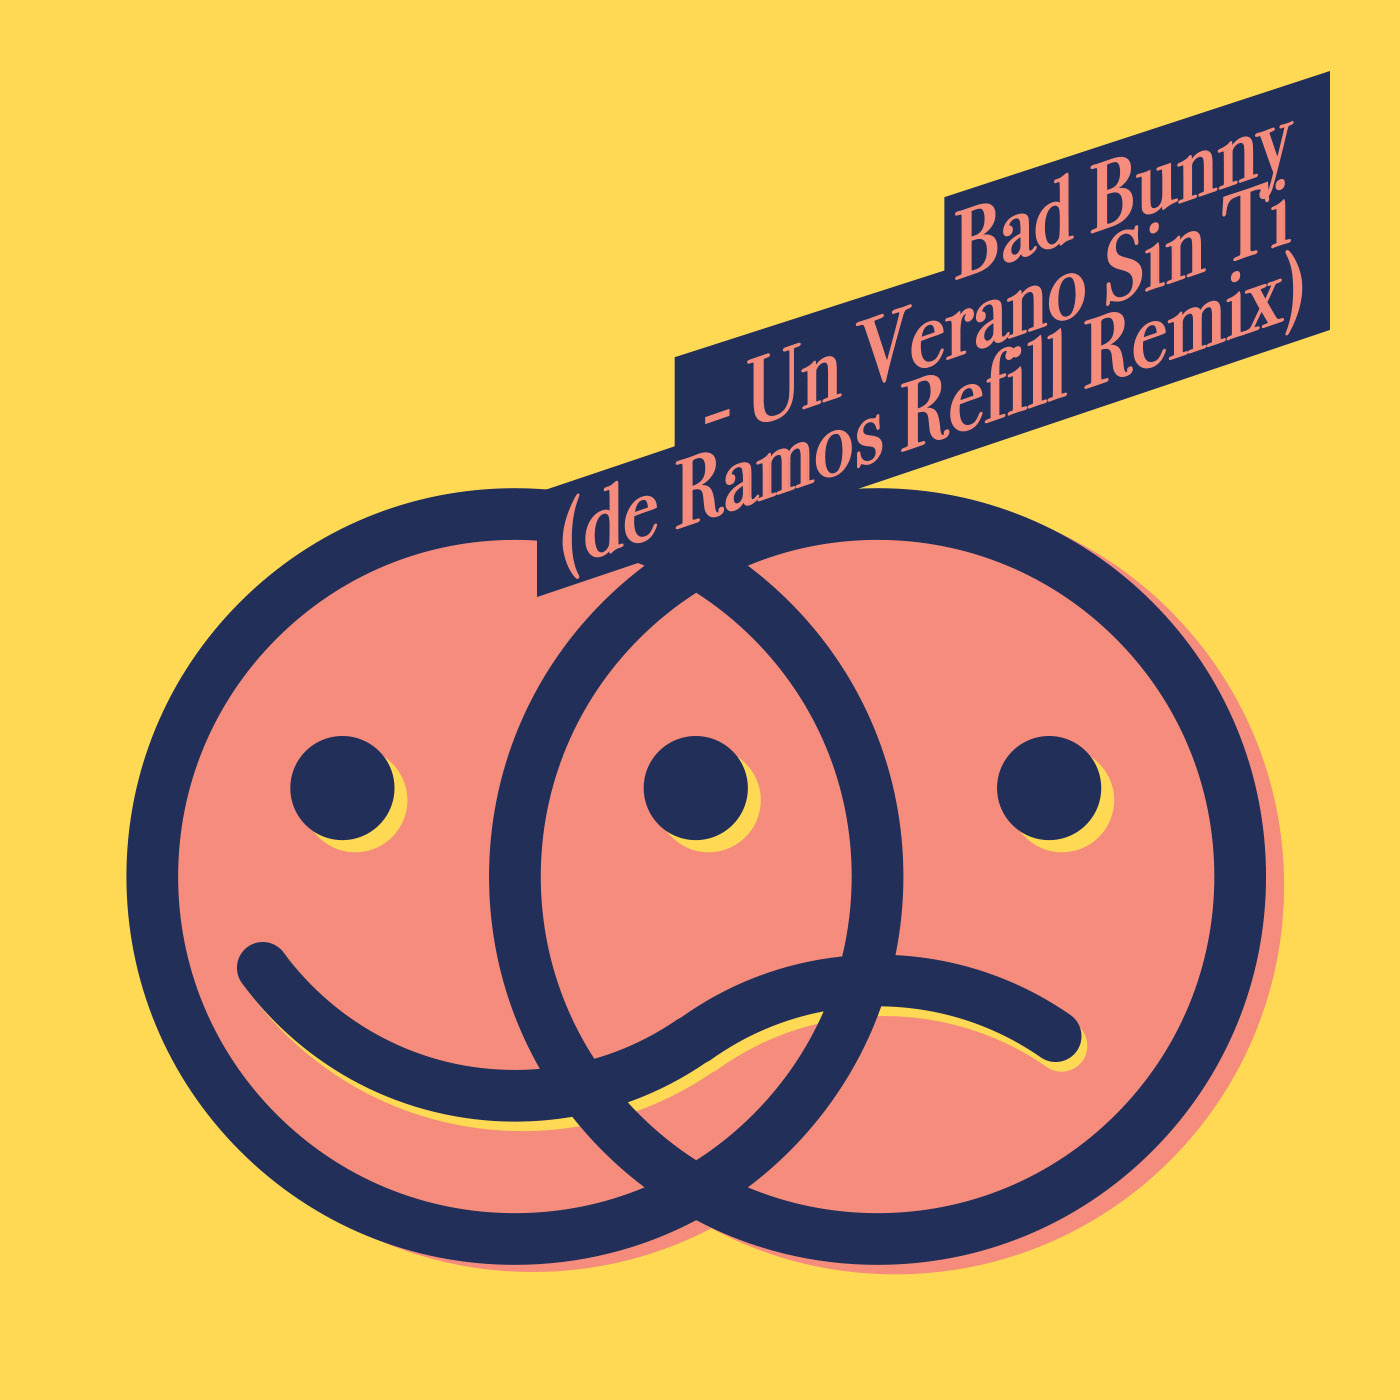 Bad Bunny - Un Verano Sin Ti (de Ramos Refill Remix)